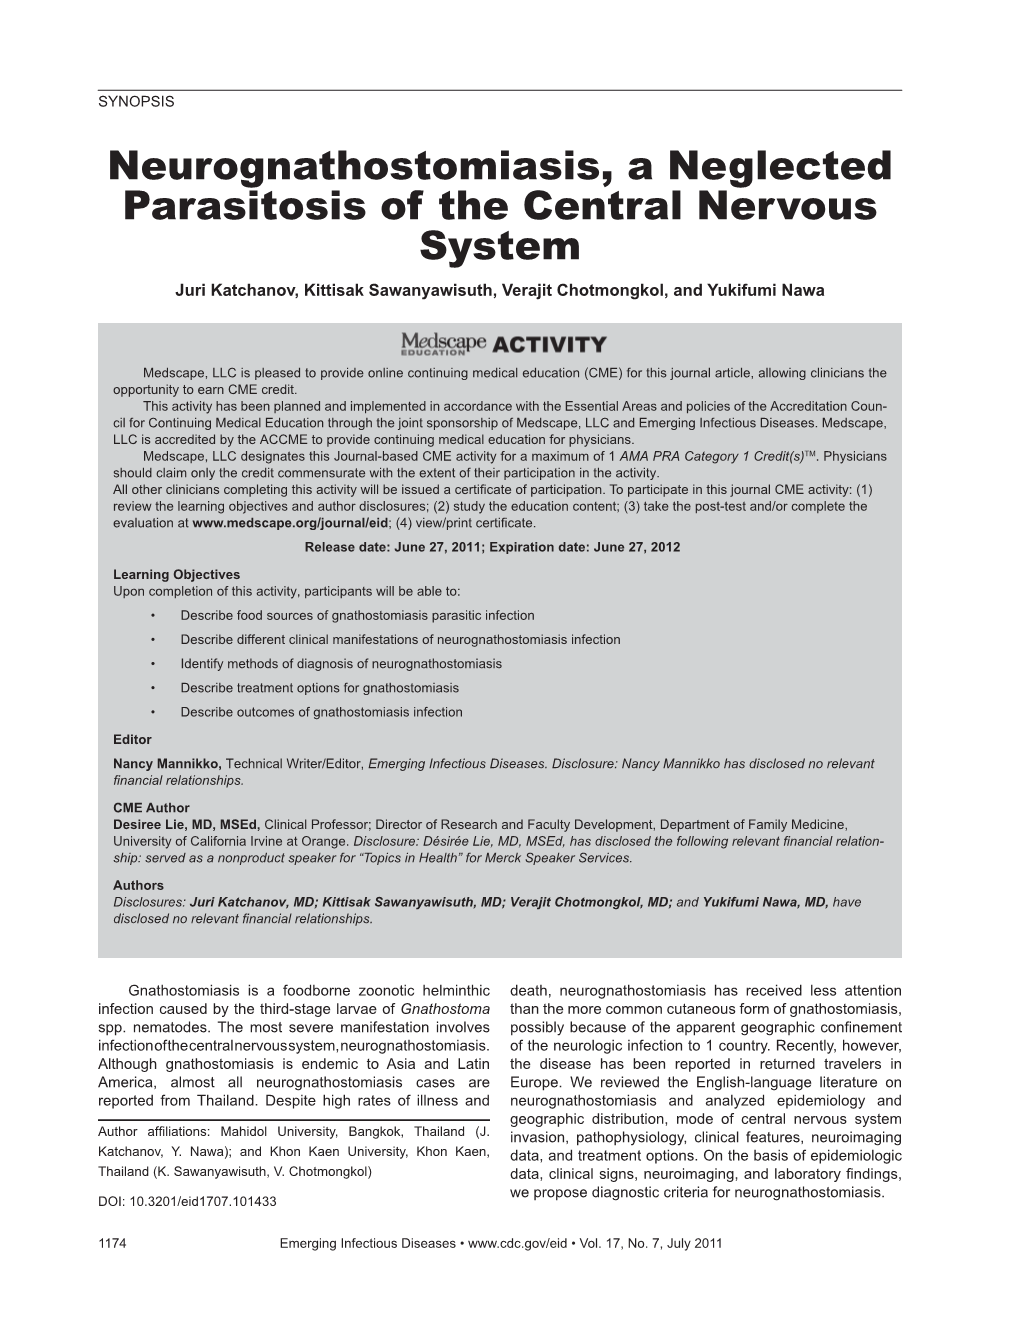 Neurognathostomiasis, a Neglected Parasitosis of the Central Nervous System Juri Katchanov, Kittisak Sawanyawisuth, Verajit Chotmongkol, and Yukifumi Nawa